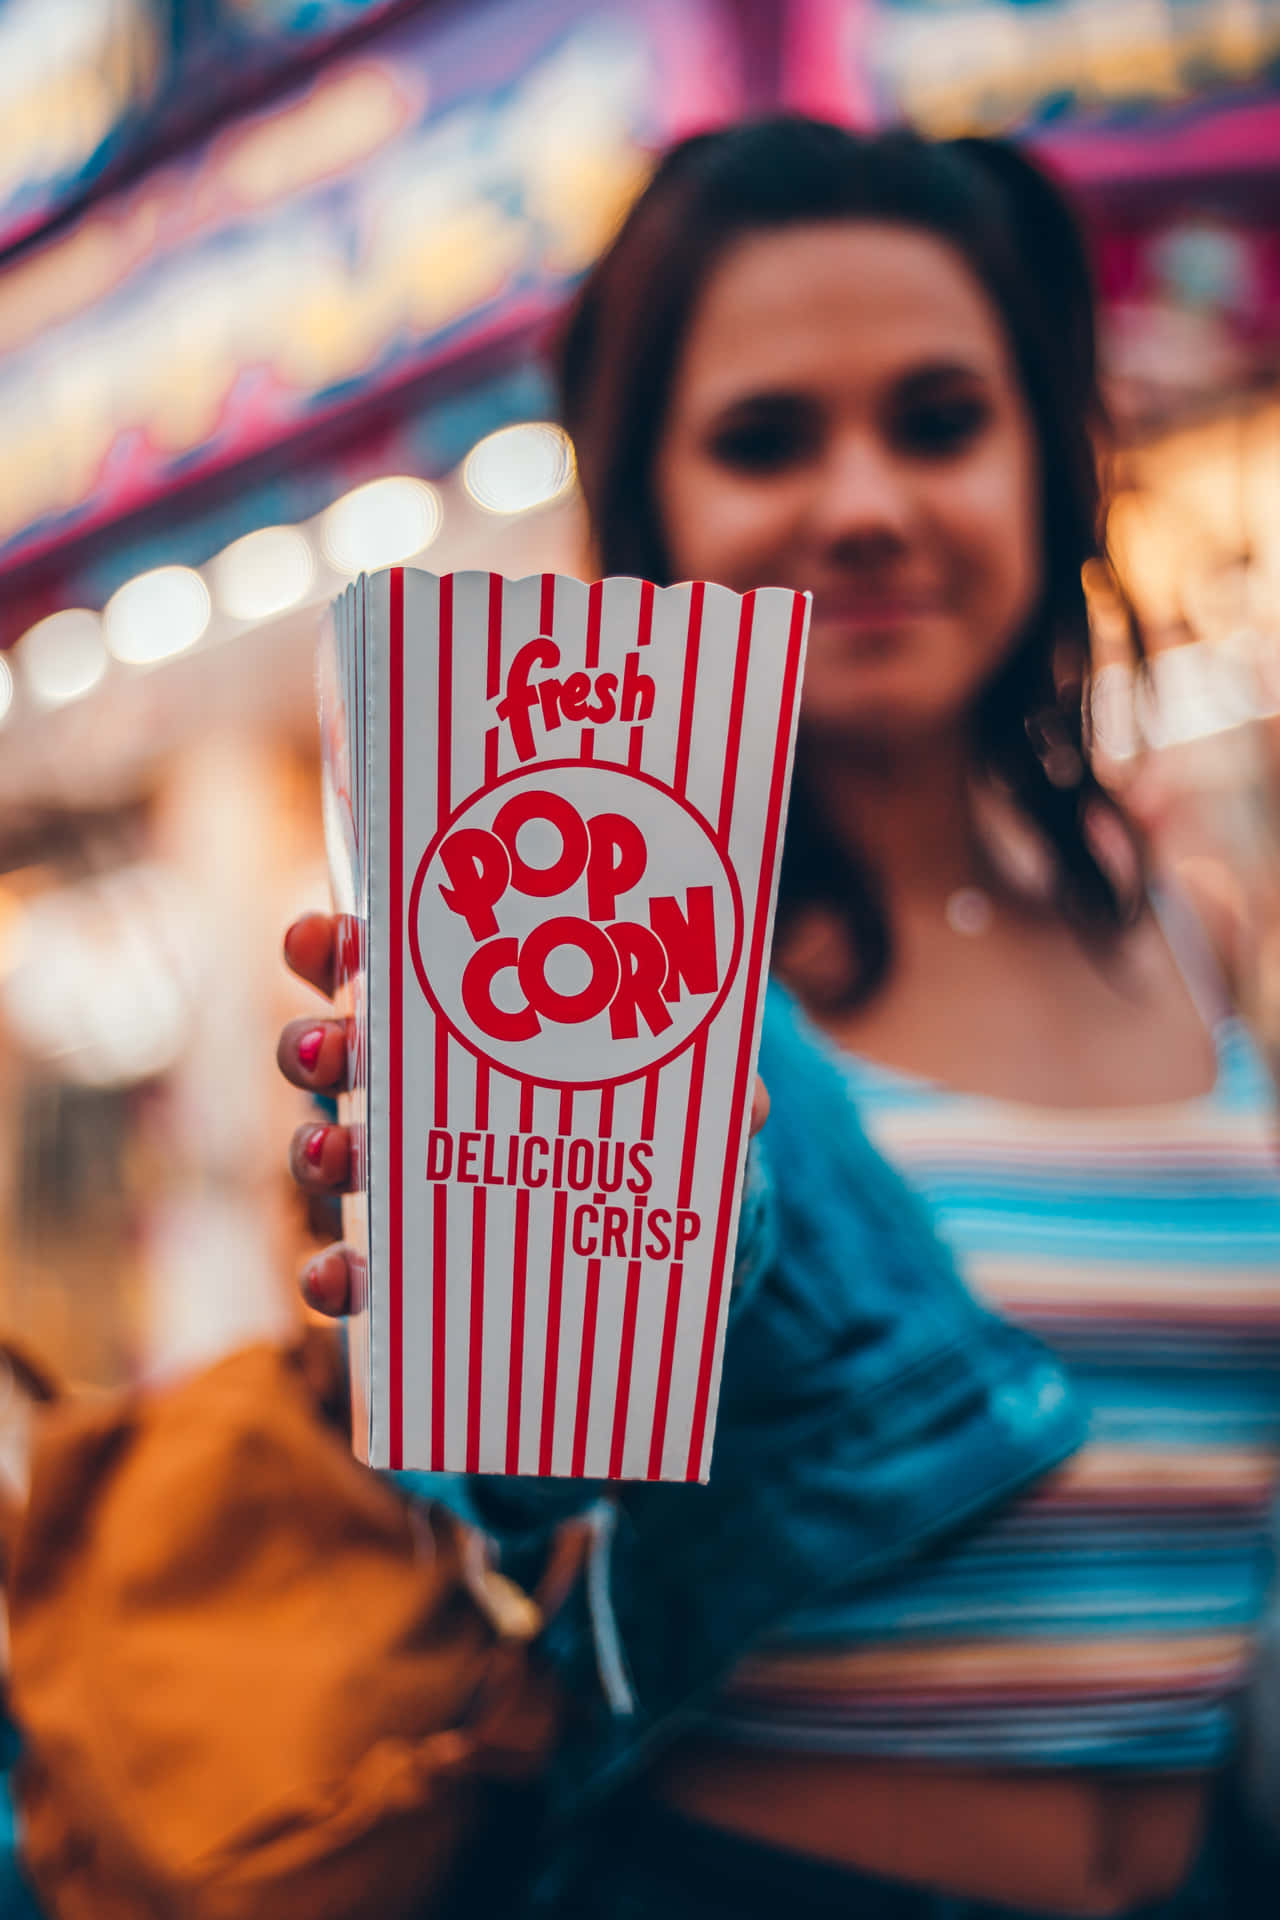 Enjoy the delicious theatre classic of popcorn